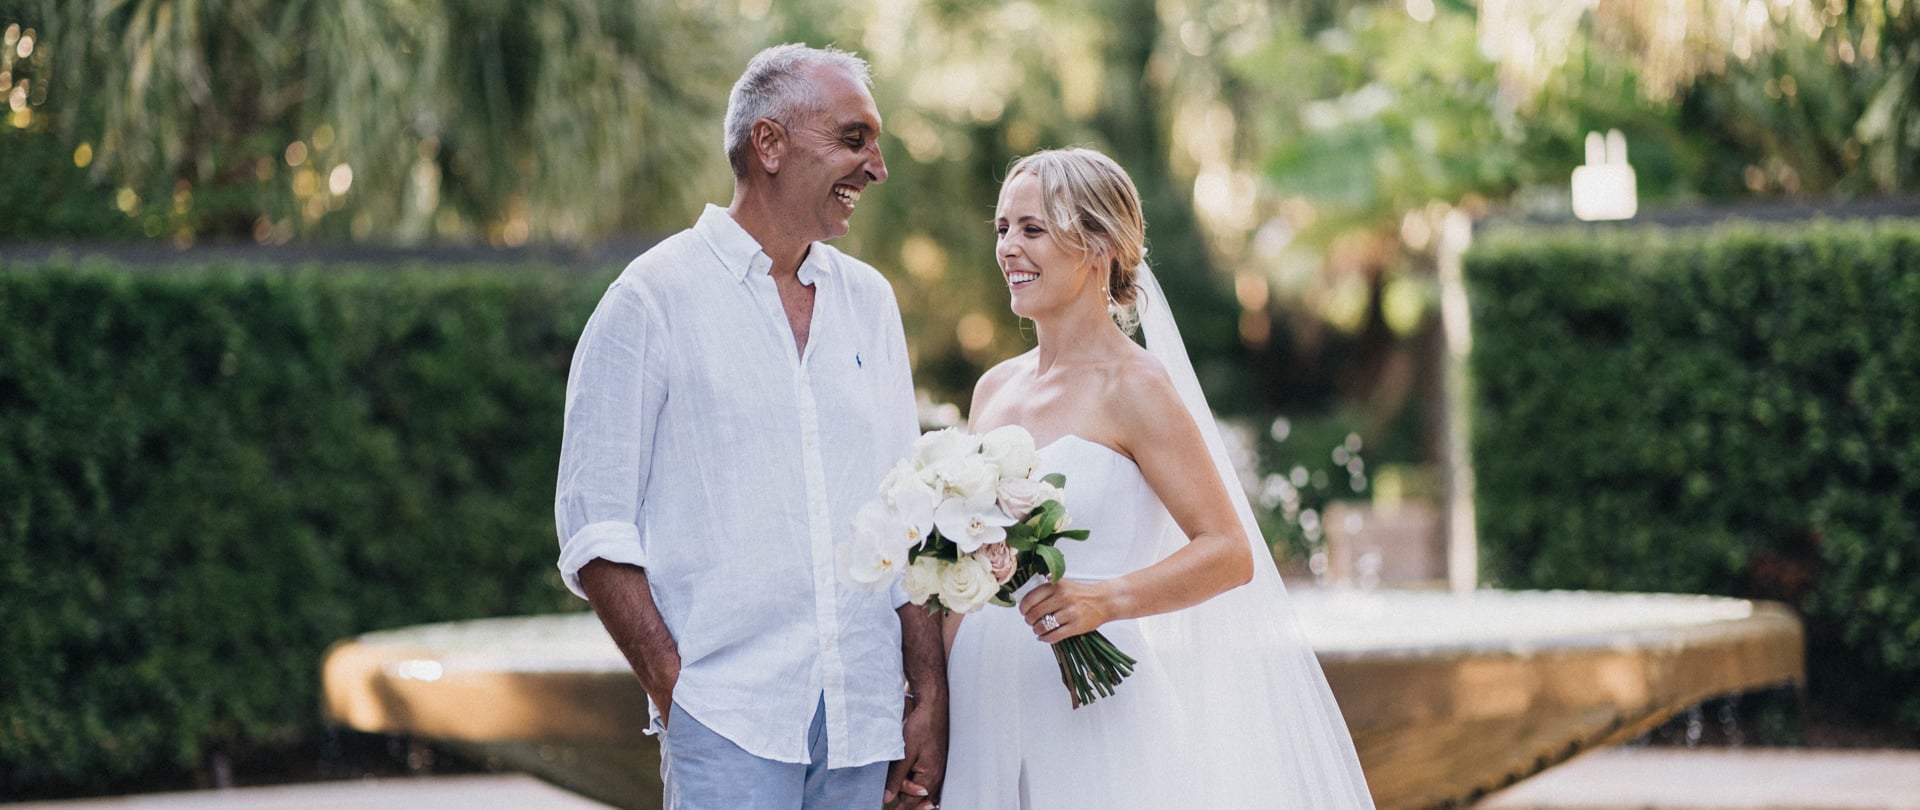 Jade & Paul Wedding Video Filmed atHayman Island,Queensland